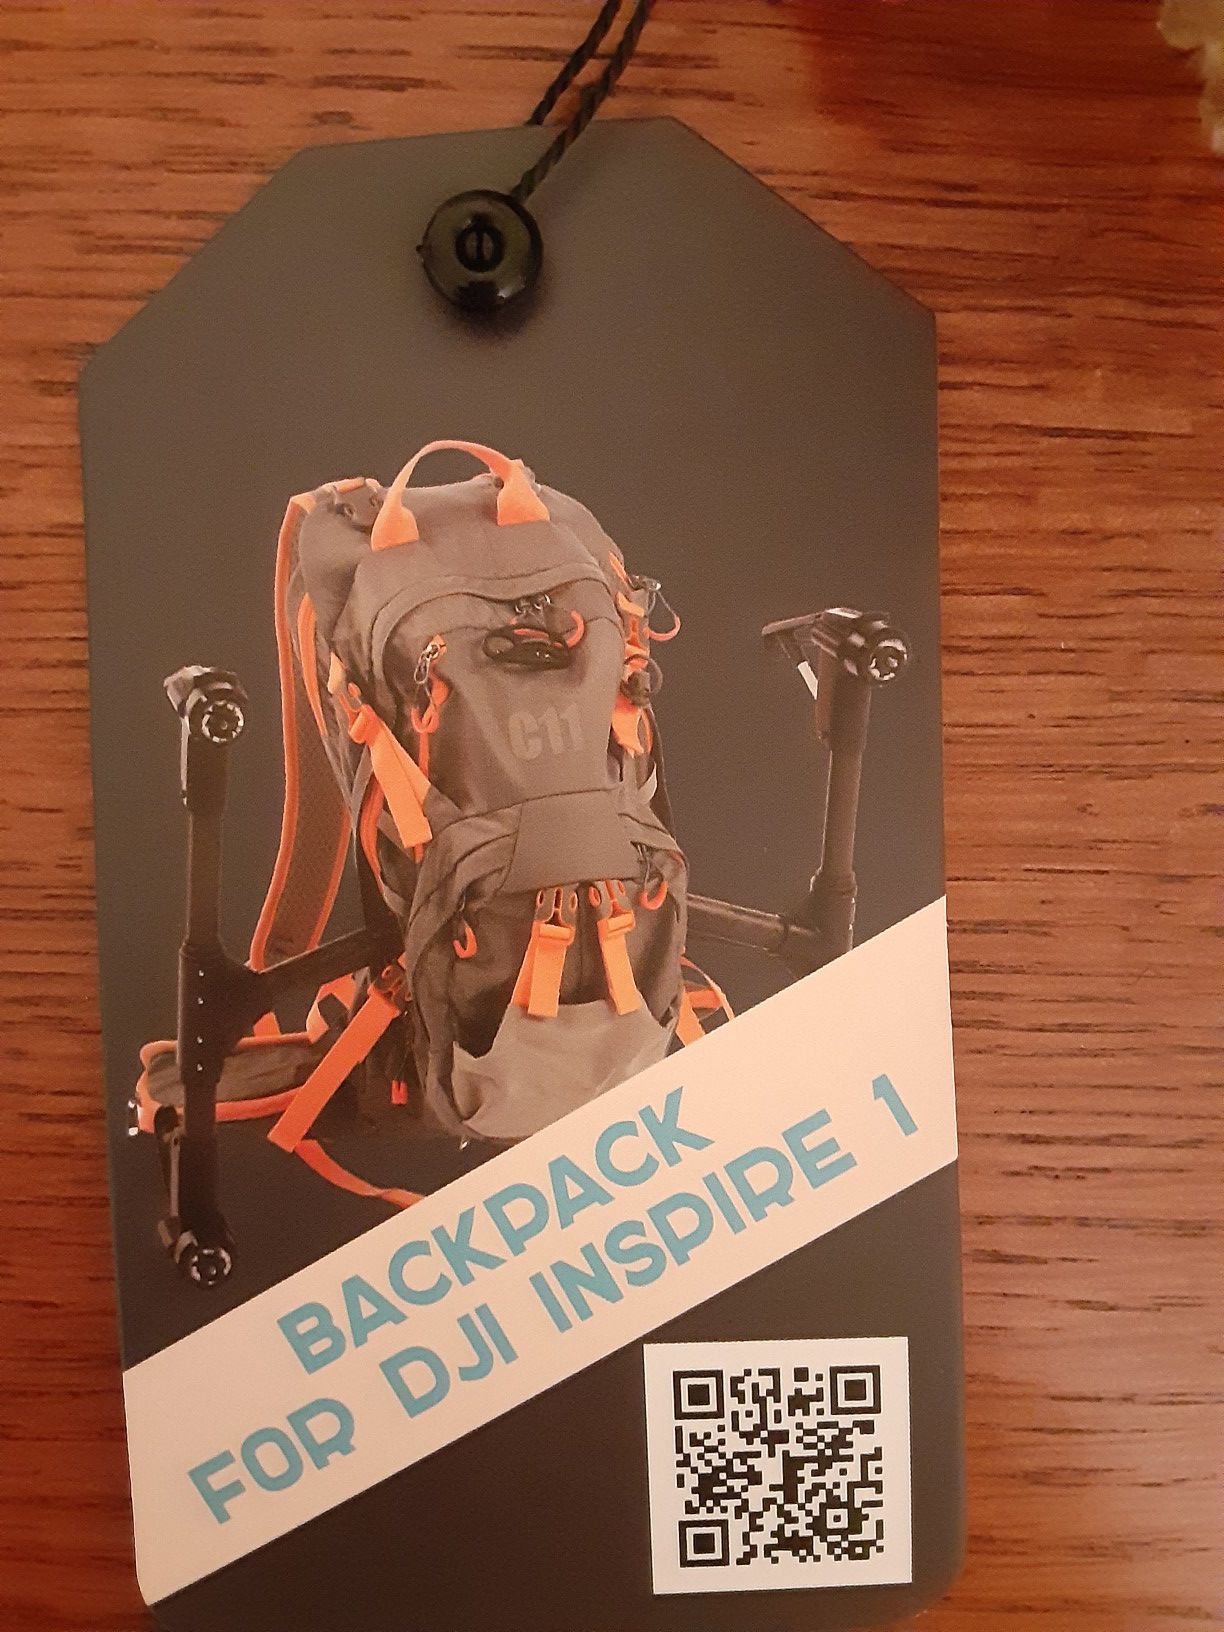 DJI Inspire 1 backpack